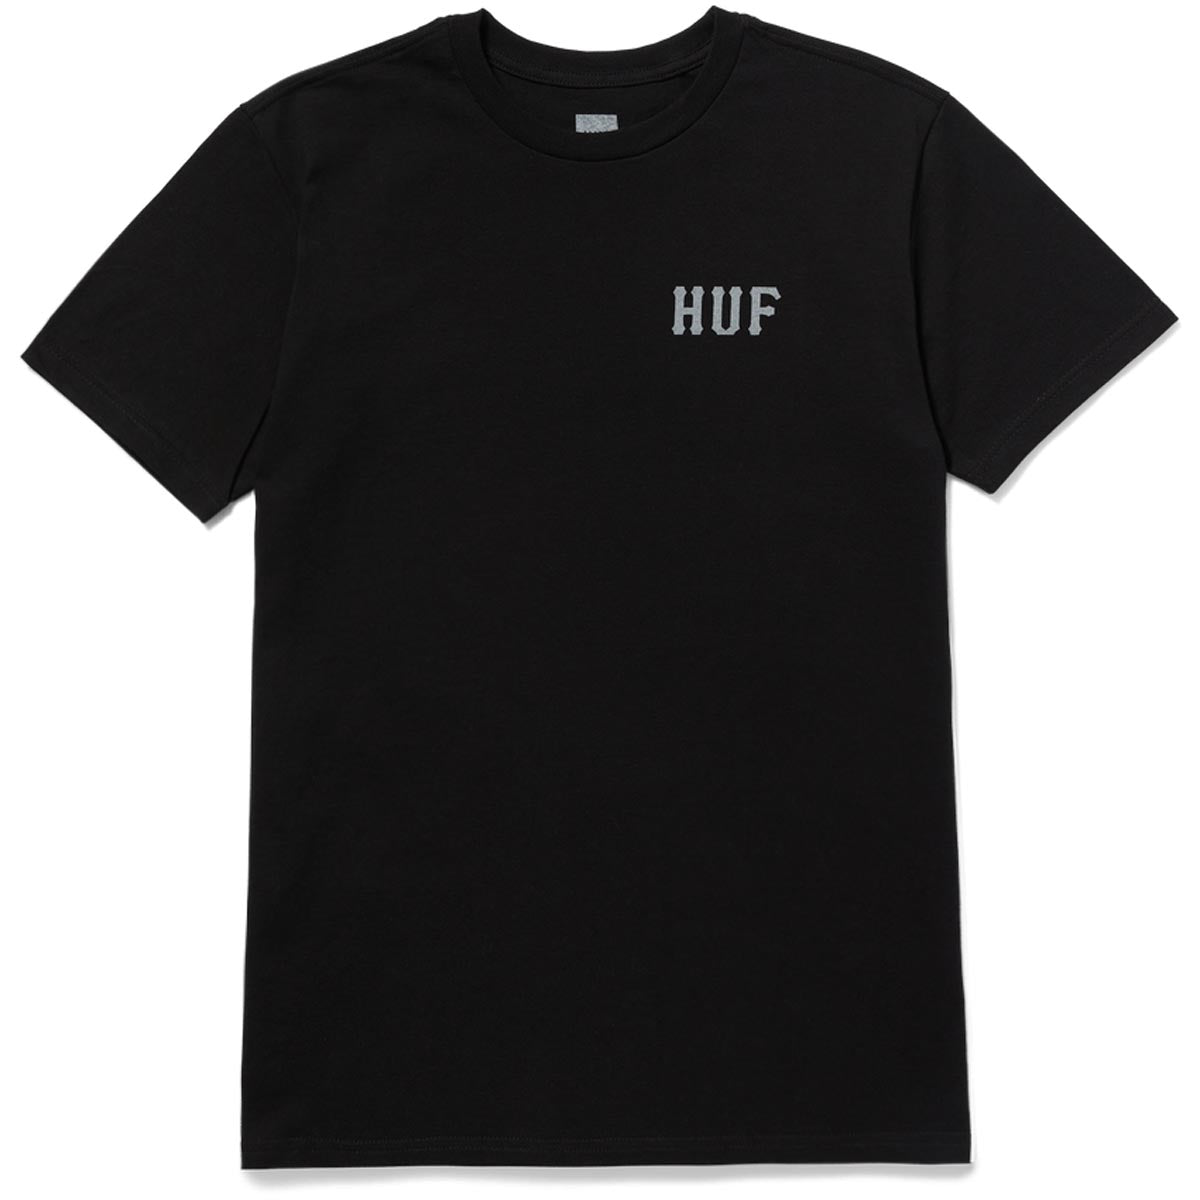 HUF Set H T-Shirt - Black image 2